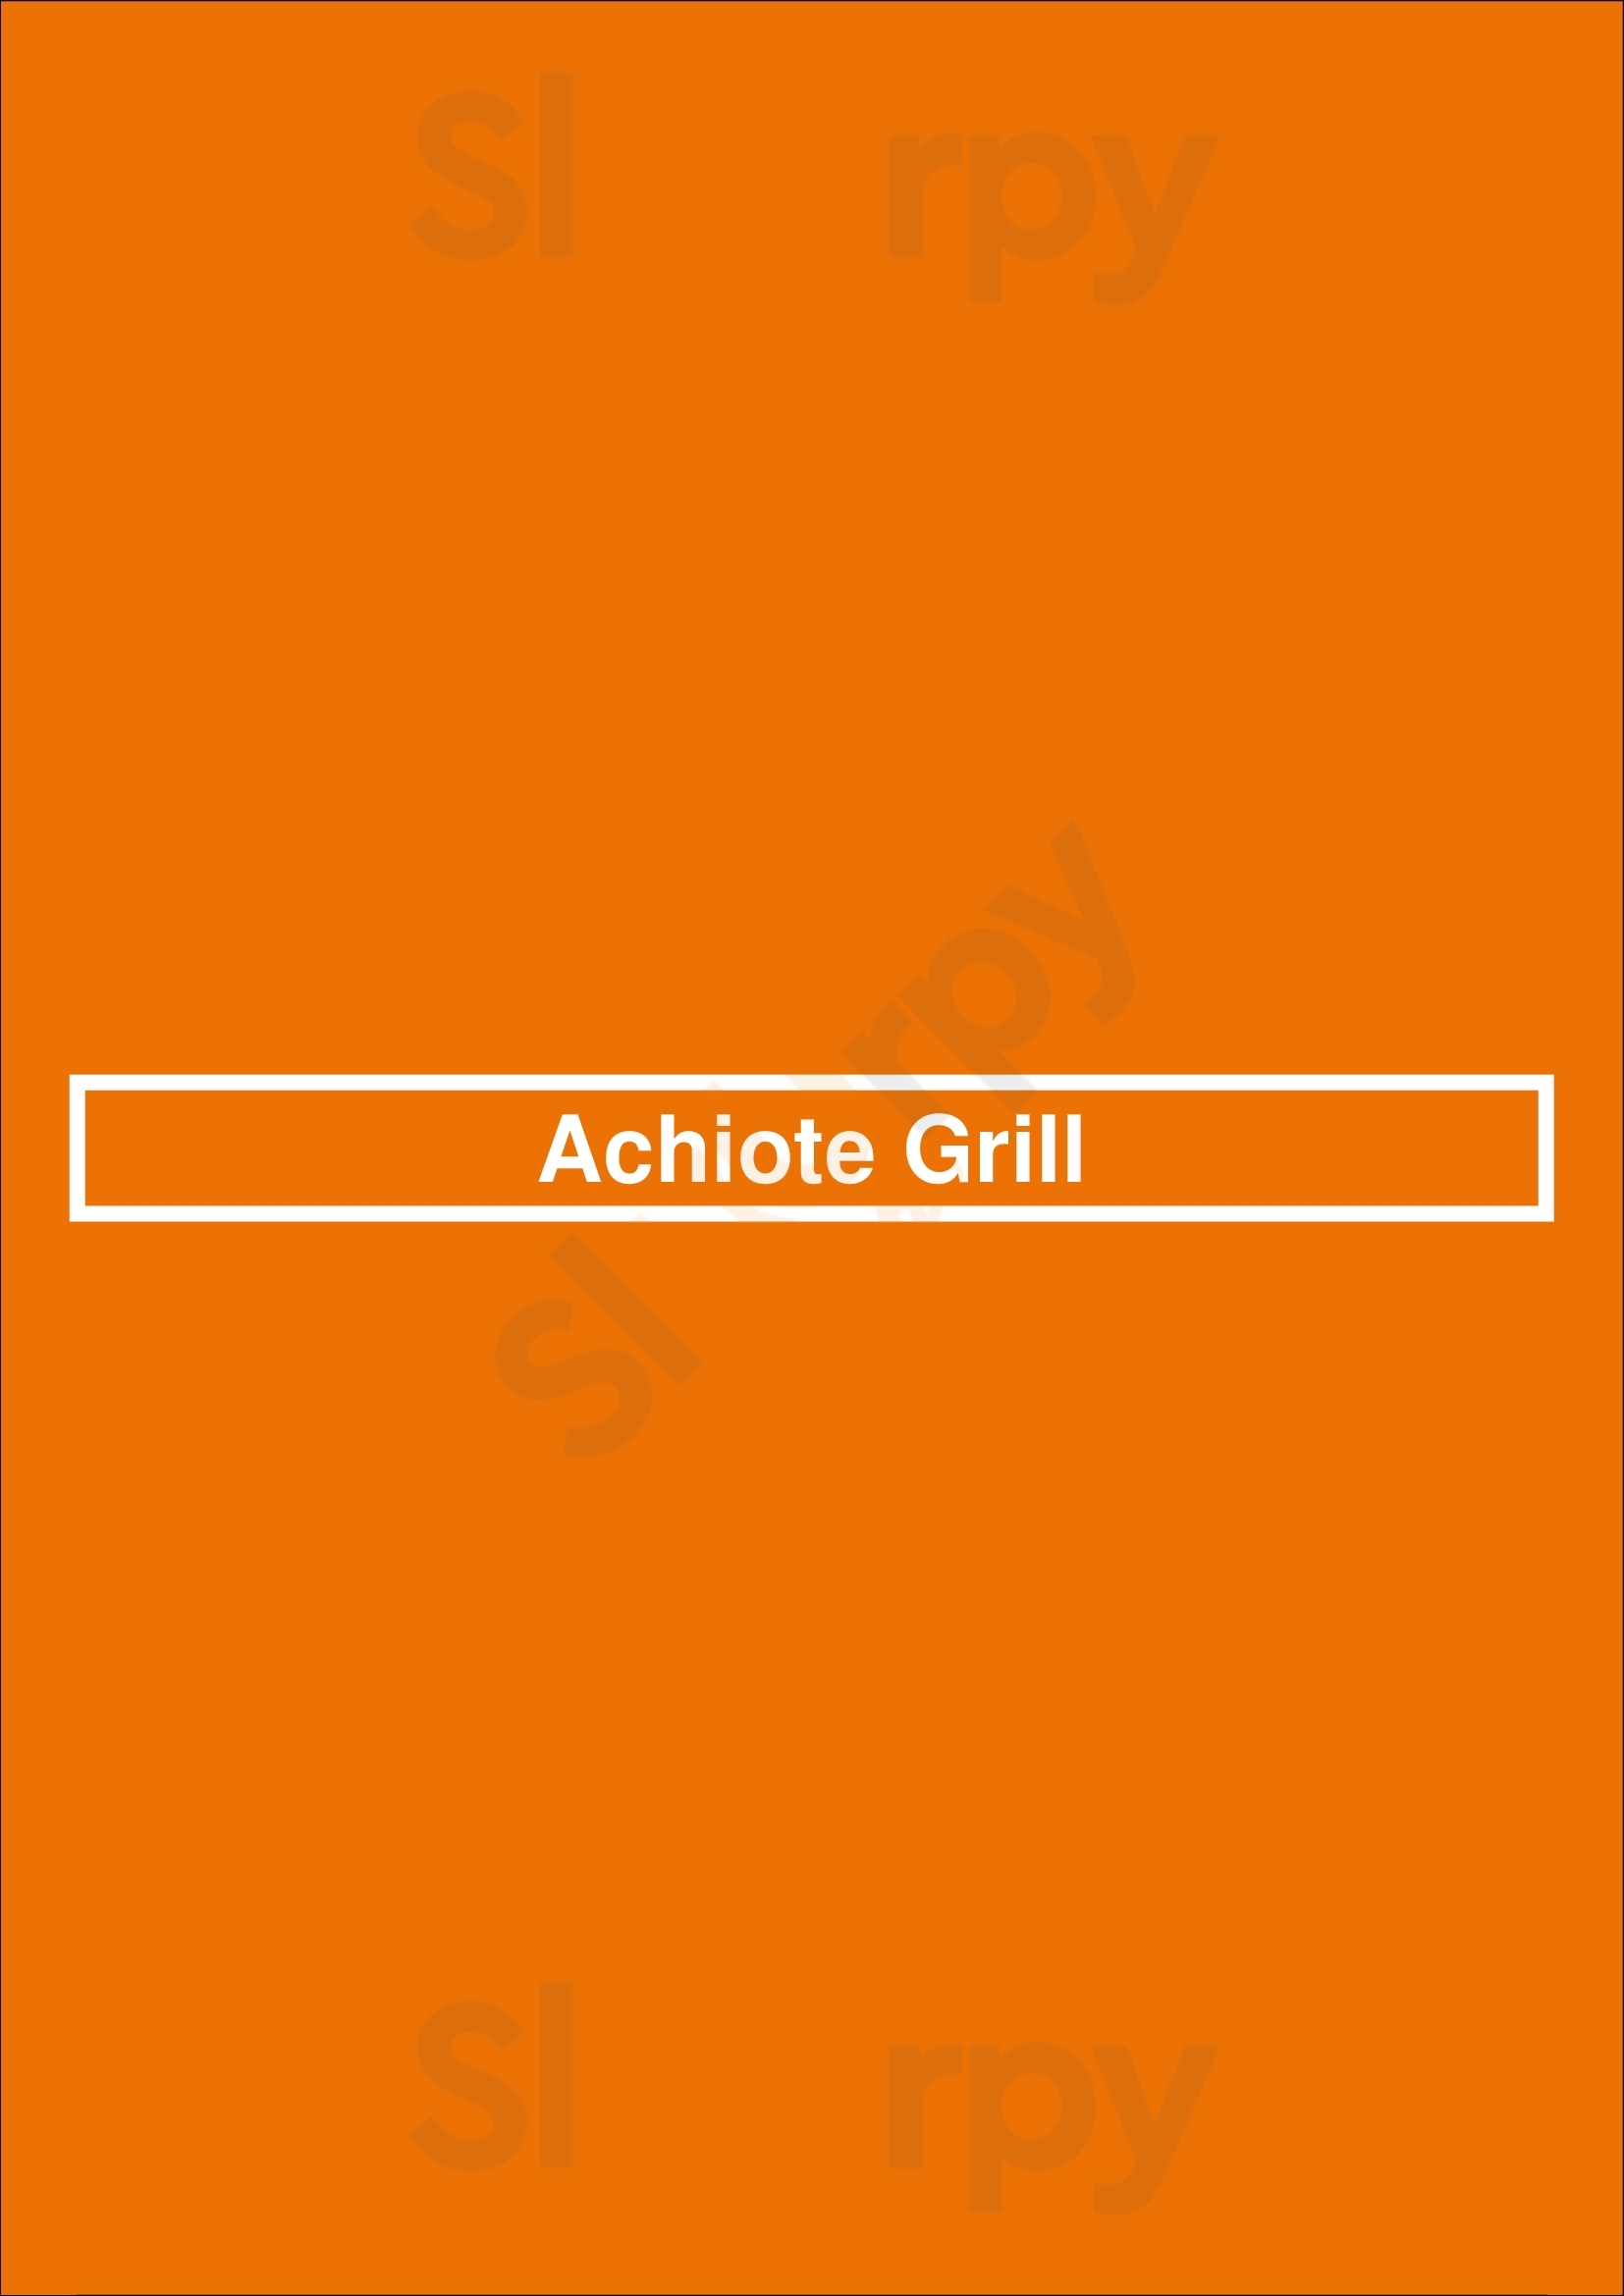 Achiote Grill Huntington Beach Menu - 1